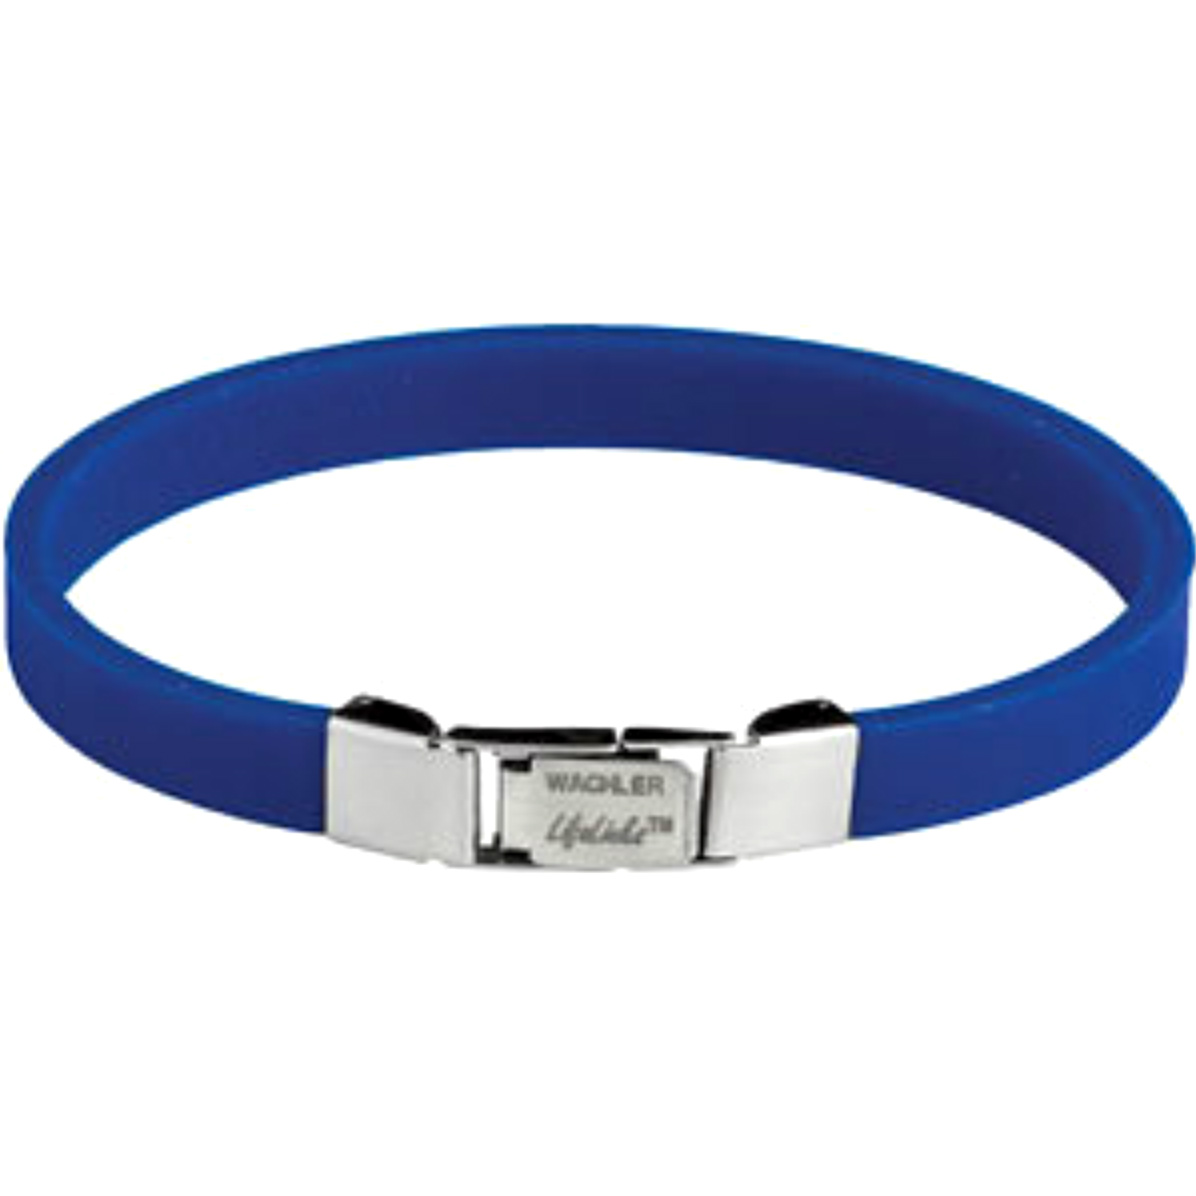 LifeLink Blue Rubber Bracelet with Clasp